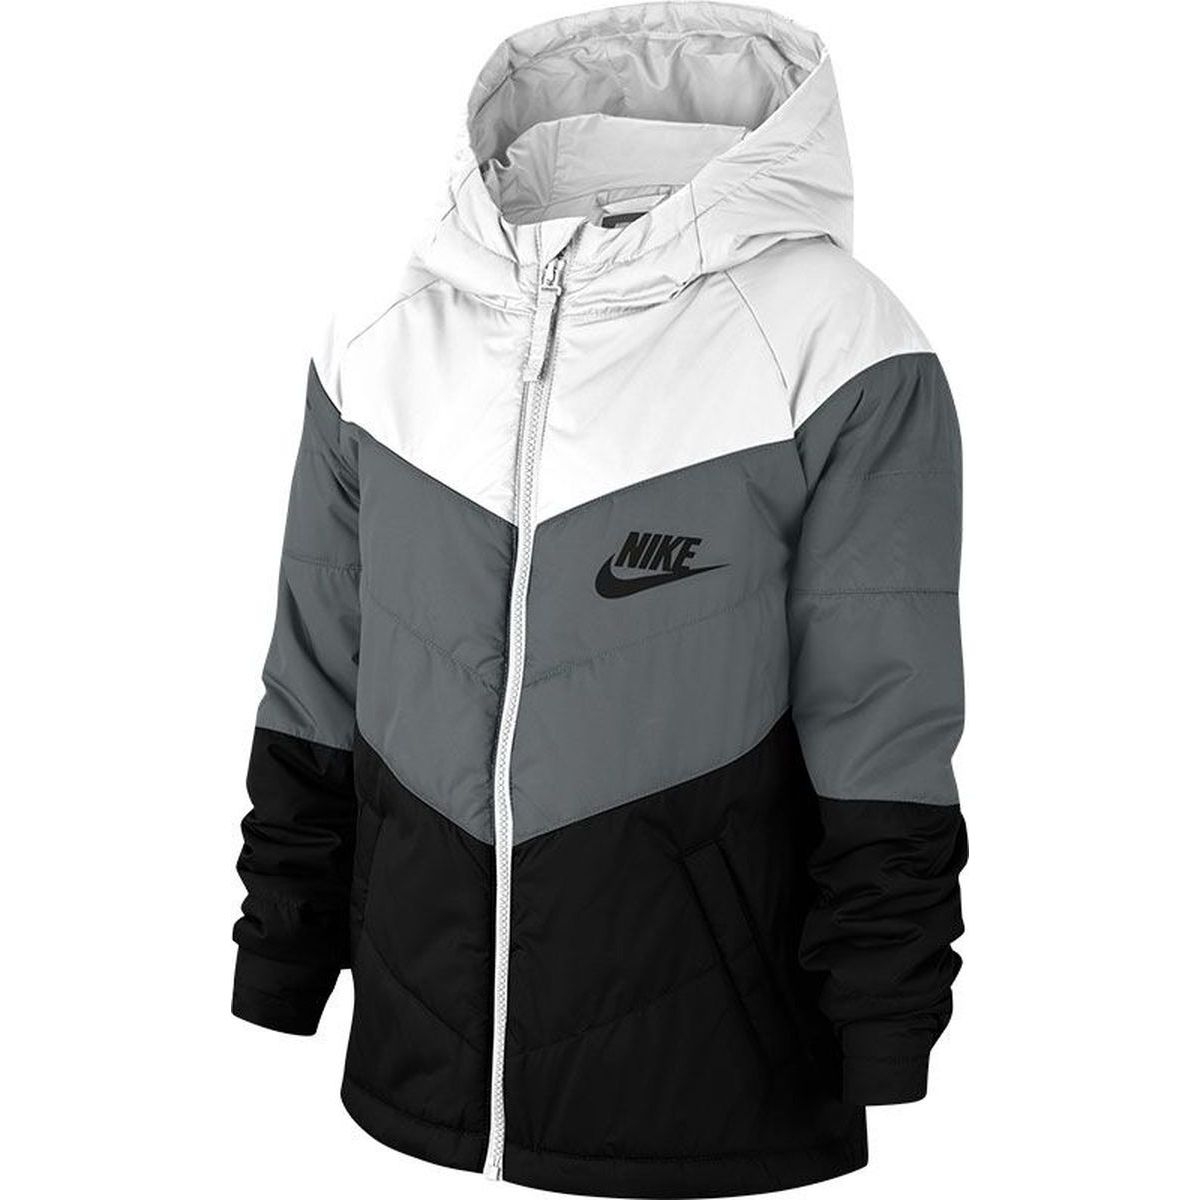 Manteaux et vestes garcon garcon Nike u nsw filled jacket gris